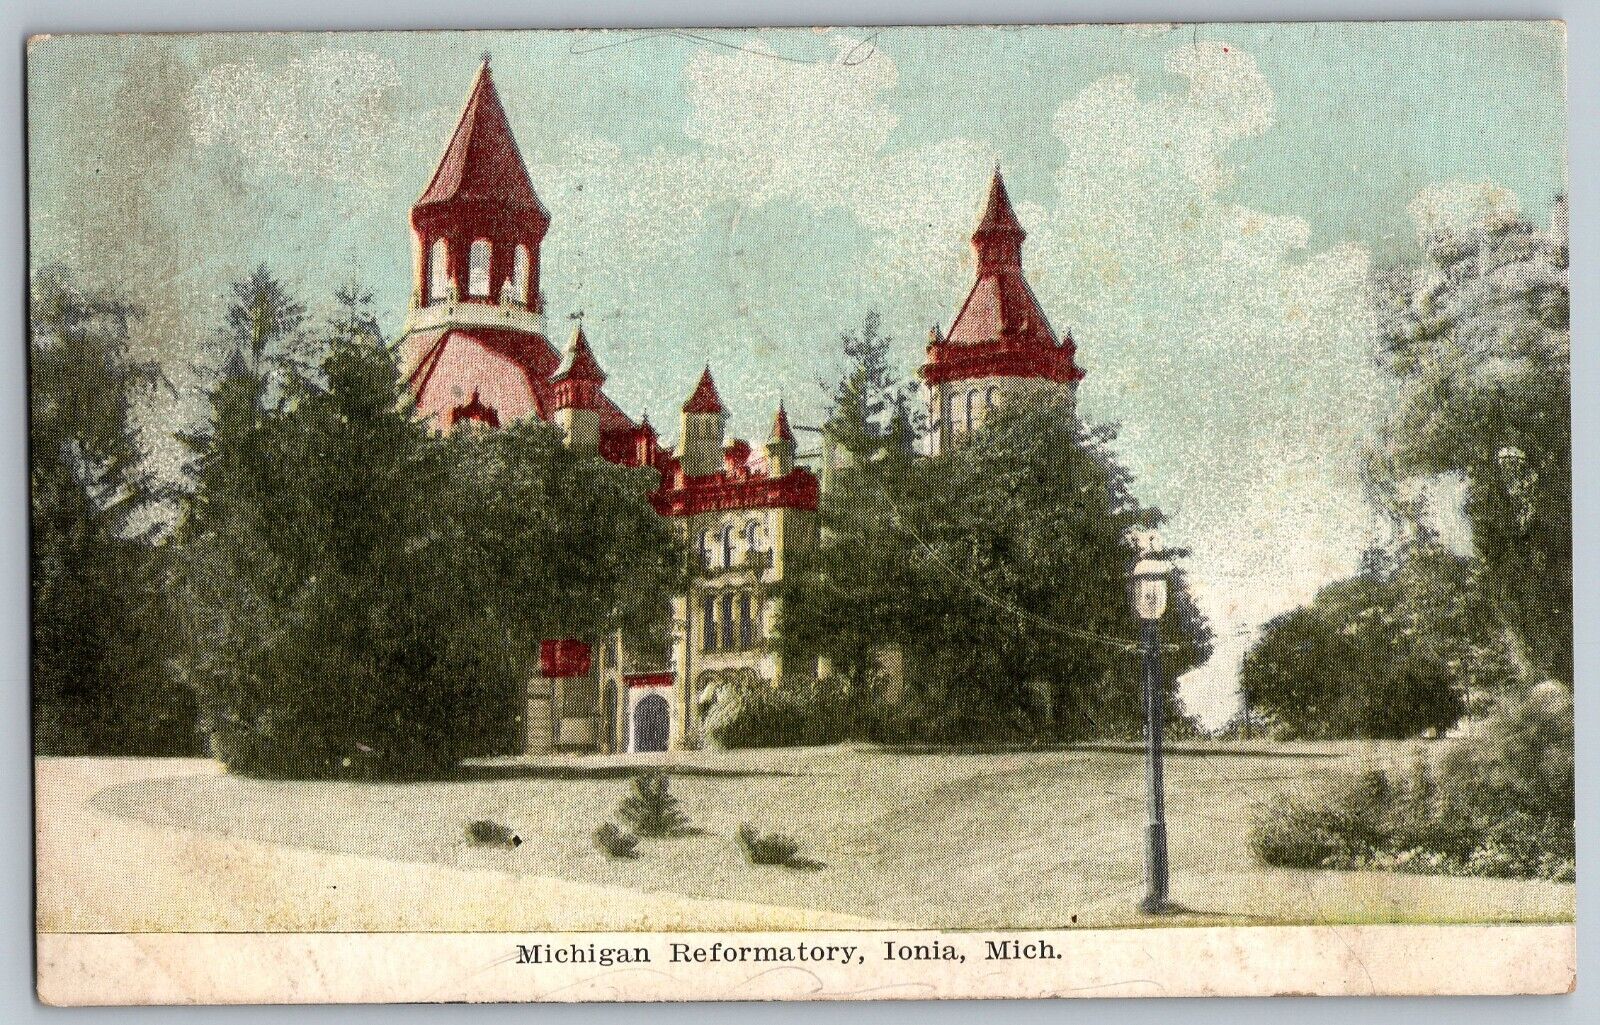 Ionia, Michigan MI - Beautiful Michigan Reformatory Castle - Vintage Postcards